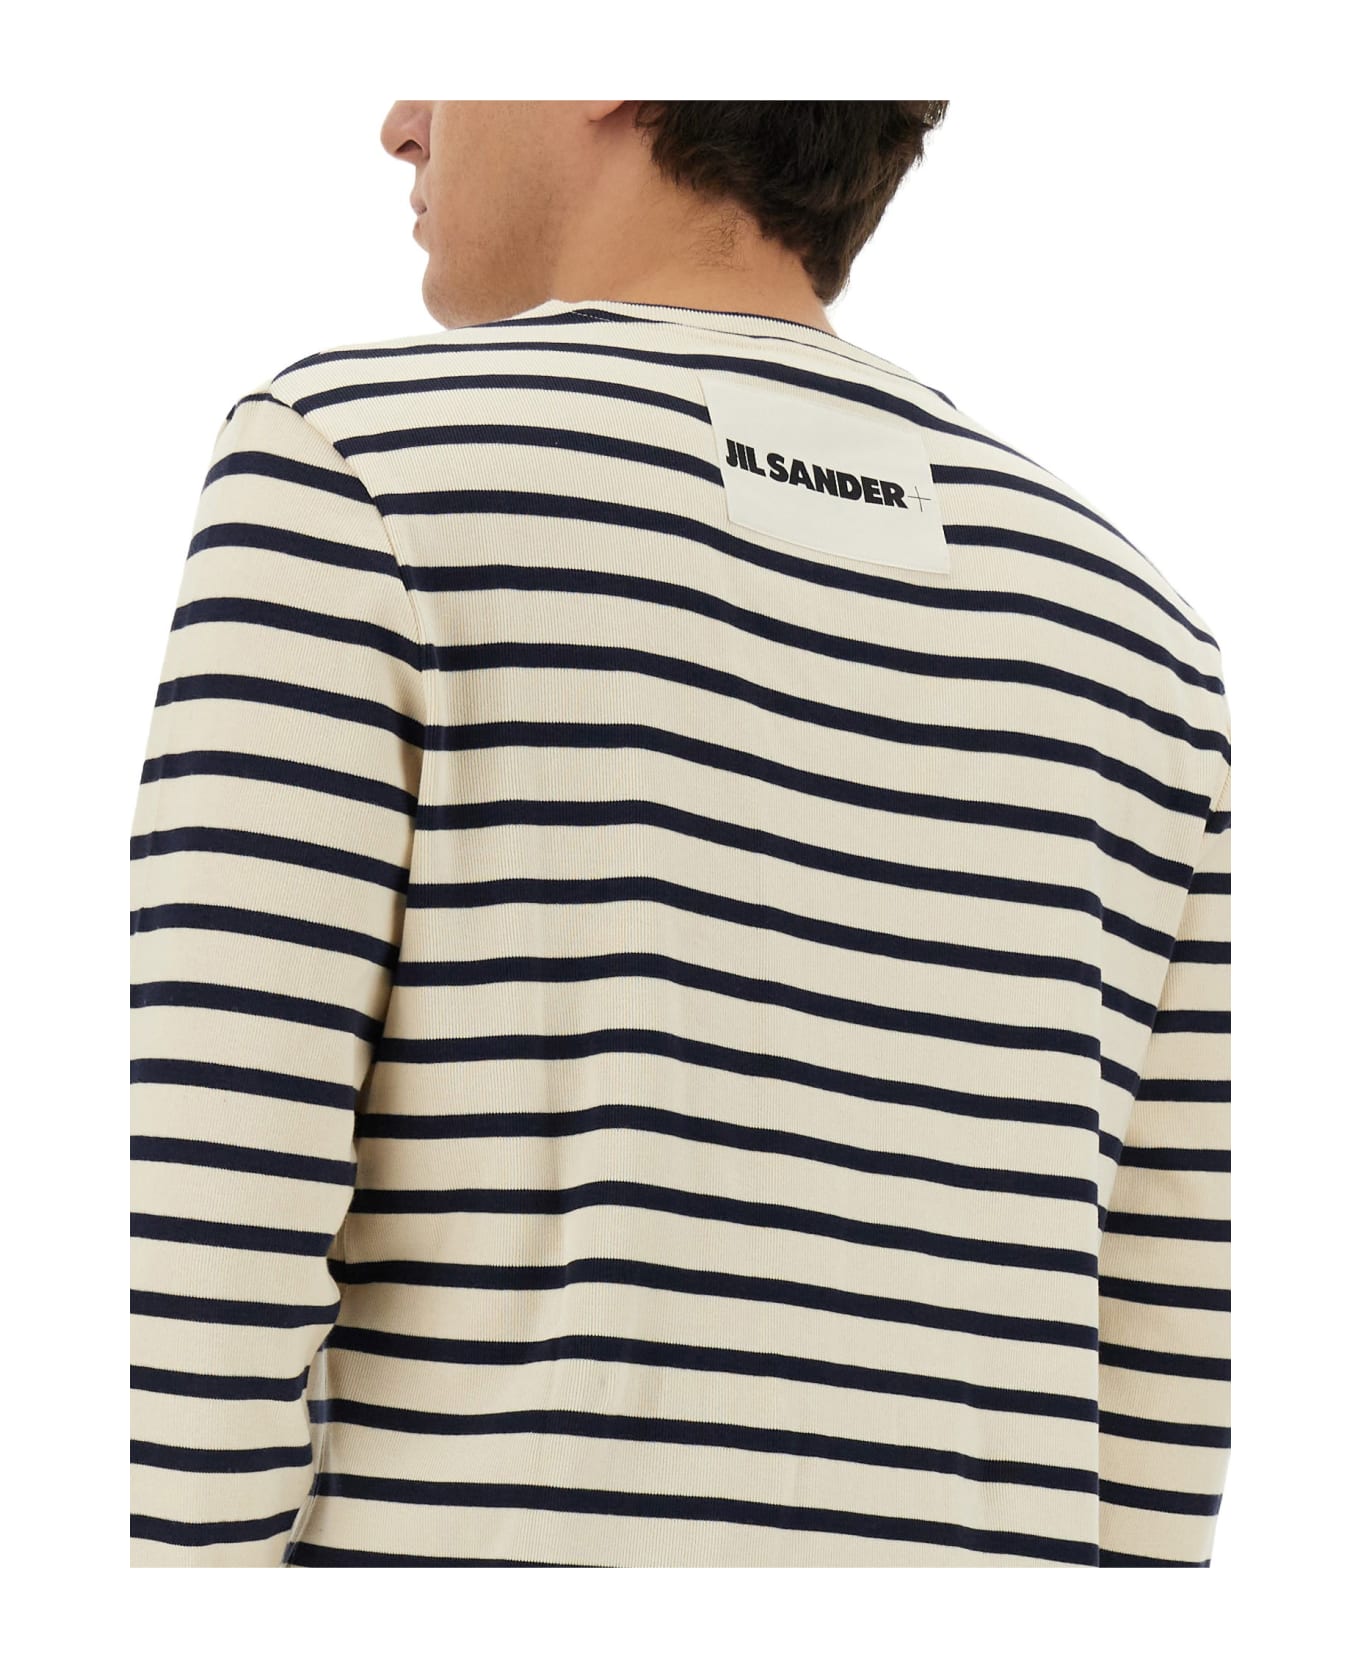 Jil Sander Striped T-shirt - Bianco/nero